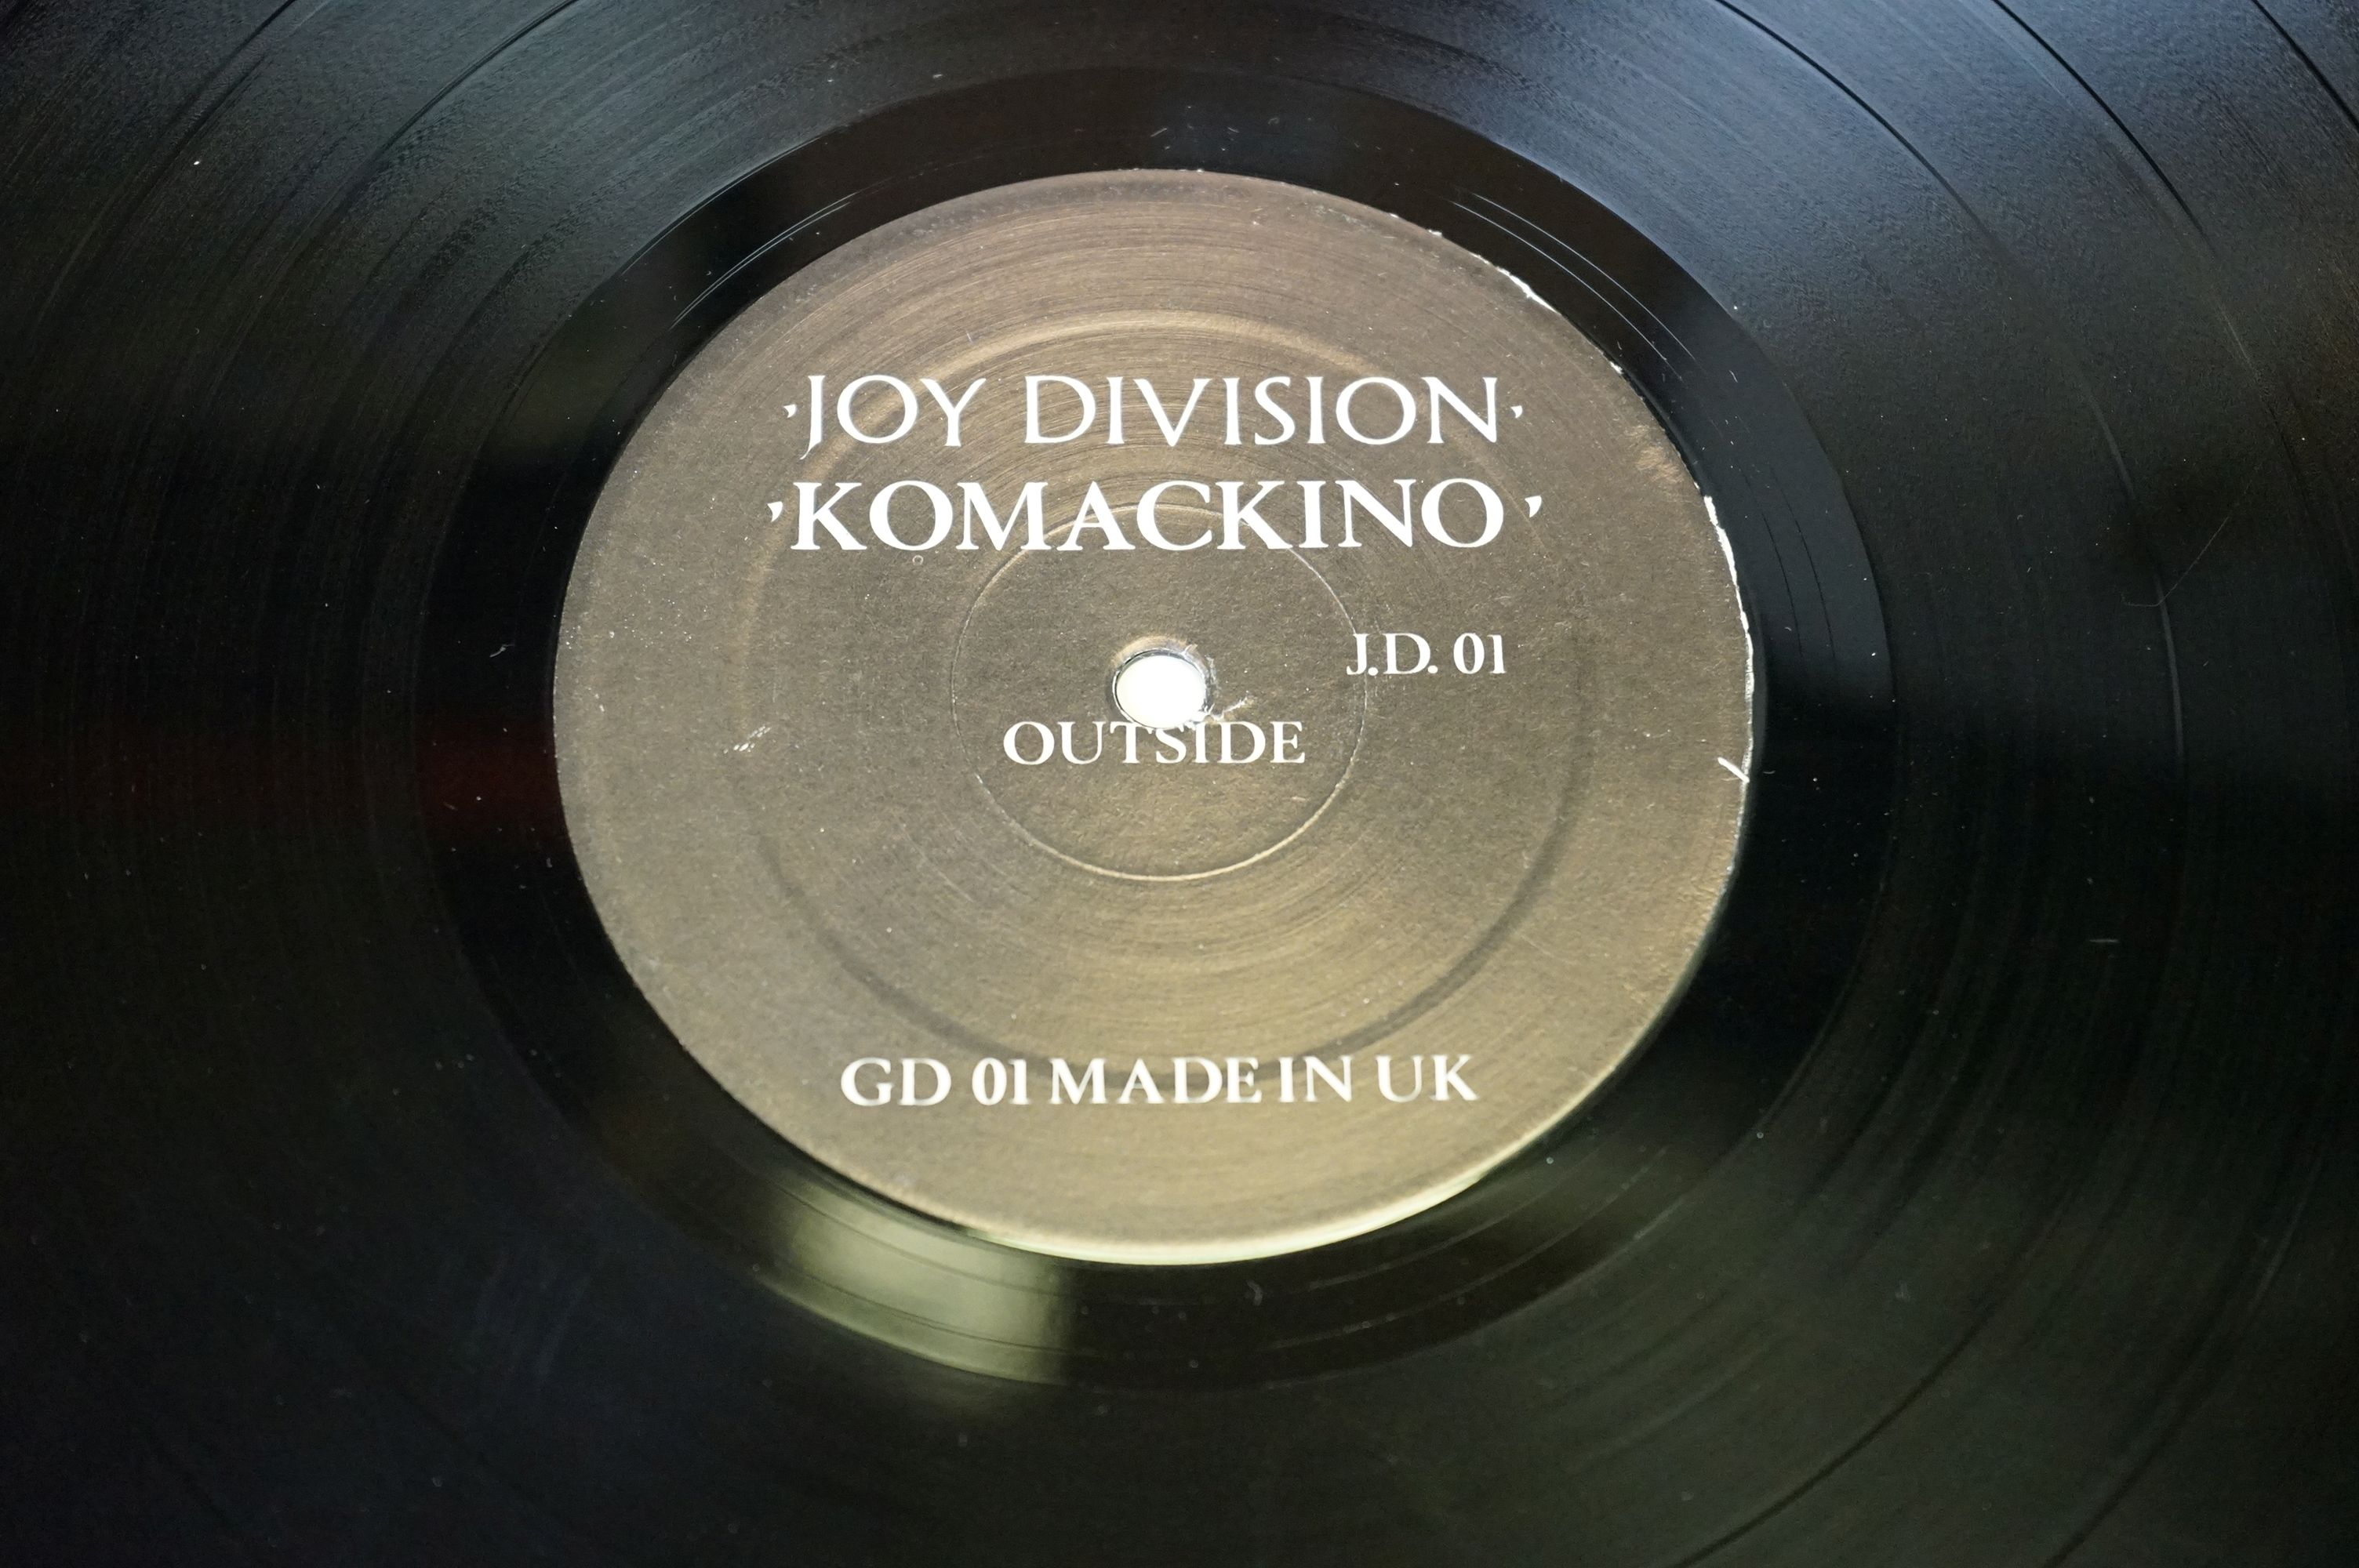 Vinyl – 2 rare Joy Division private pressing albums to include Joy Division – Komackino (Original - Image 4 of 12